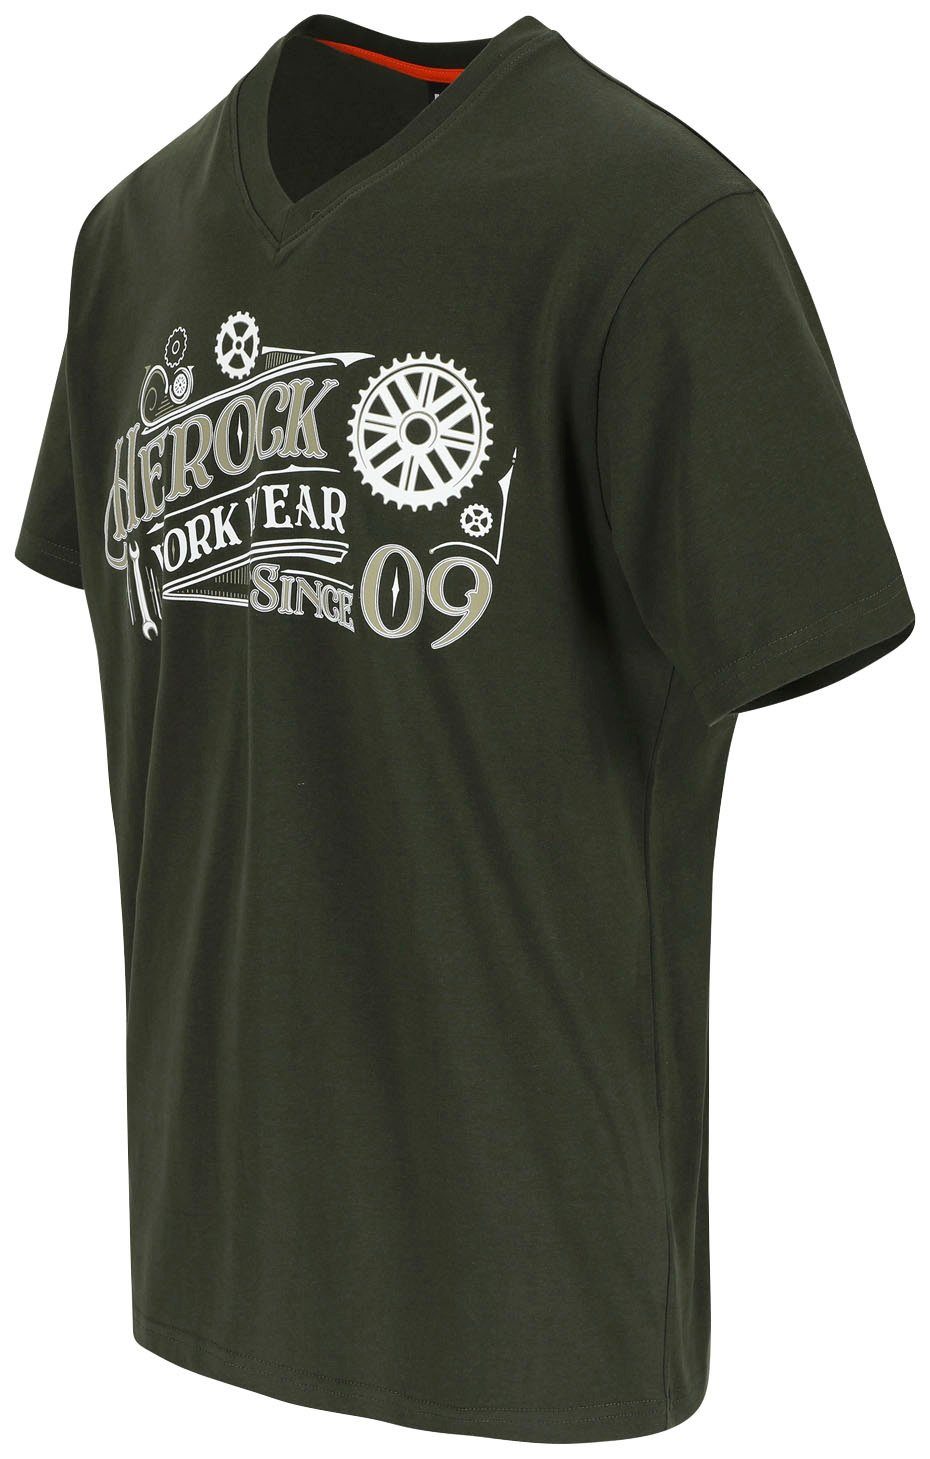 Edition Limited T-Shirt Herock Barber